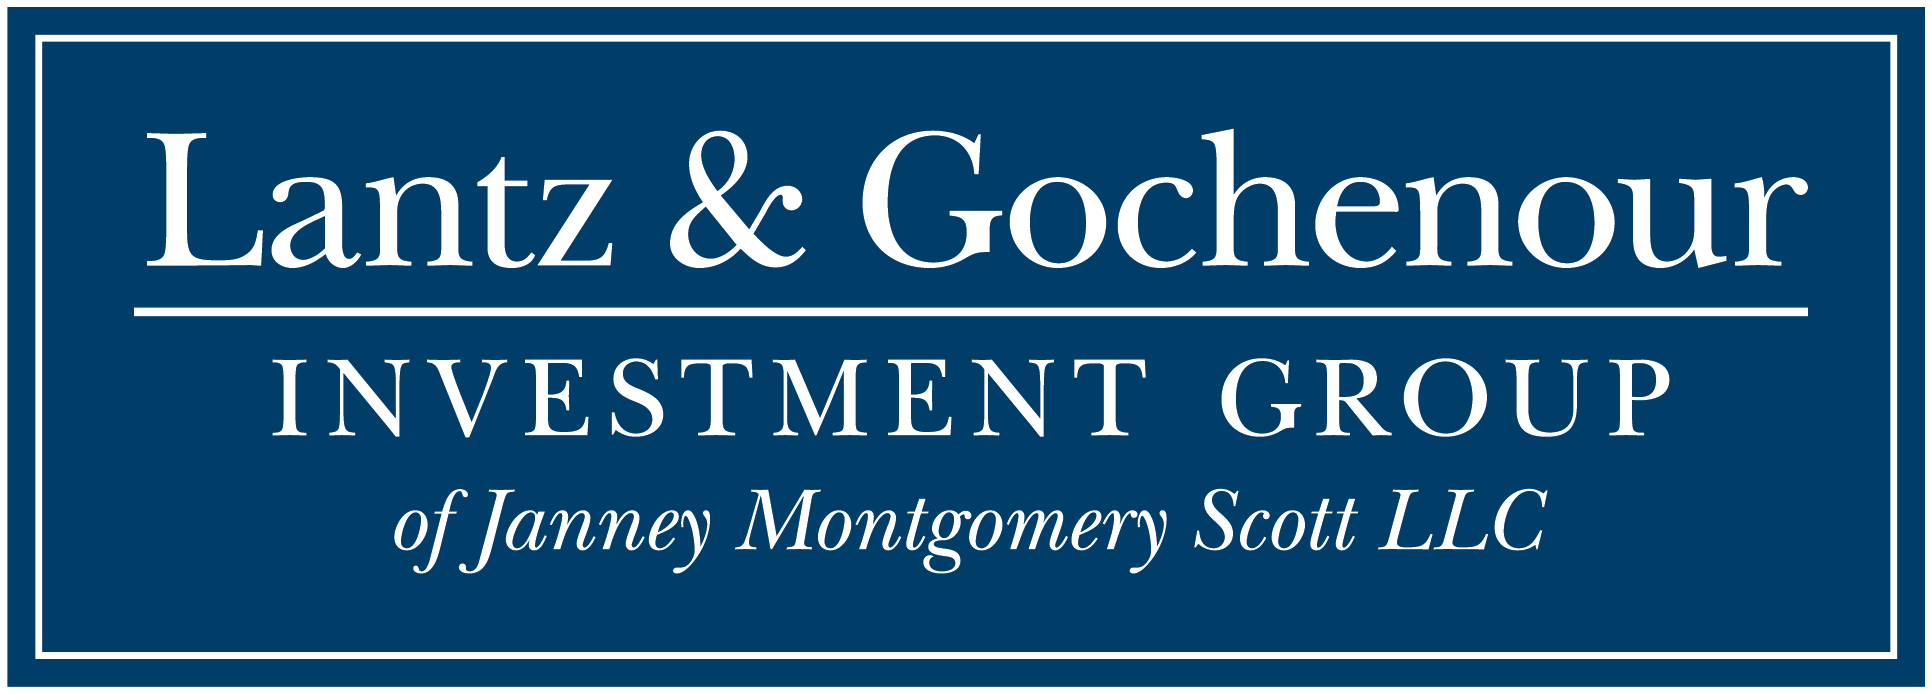 Lantz-Gochenour Group of Janney Montgomery Scott